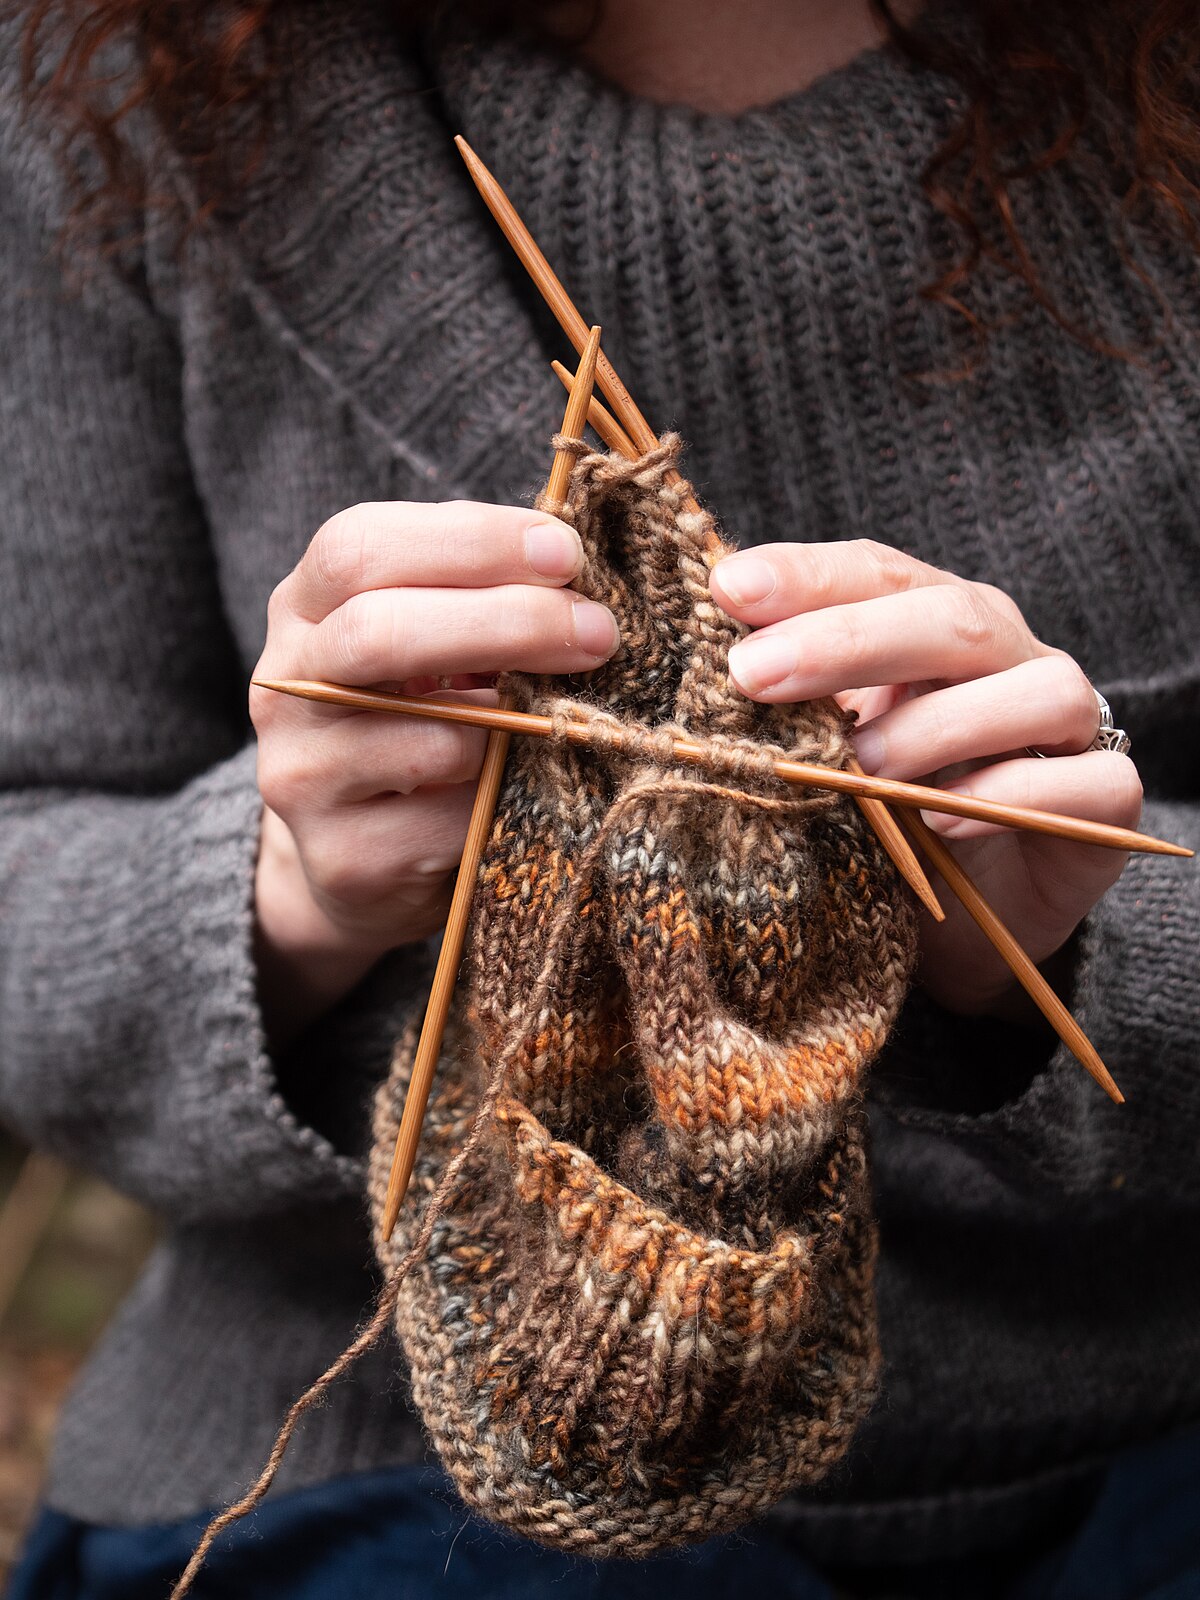 File:Straight knitting needles.JPG - Wikipedia